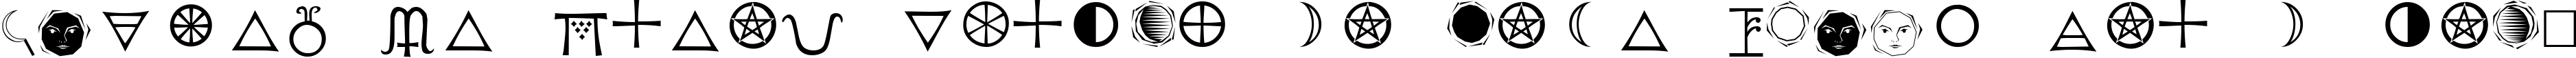 Пример написания шрифтом Astrological текста на французском